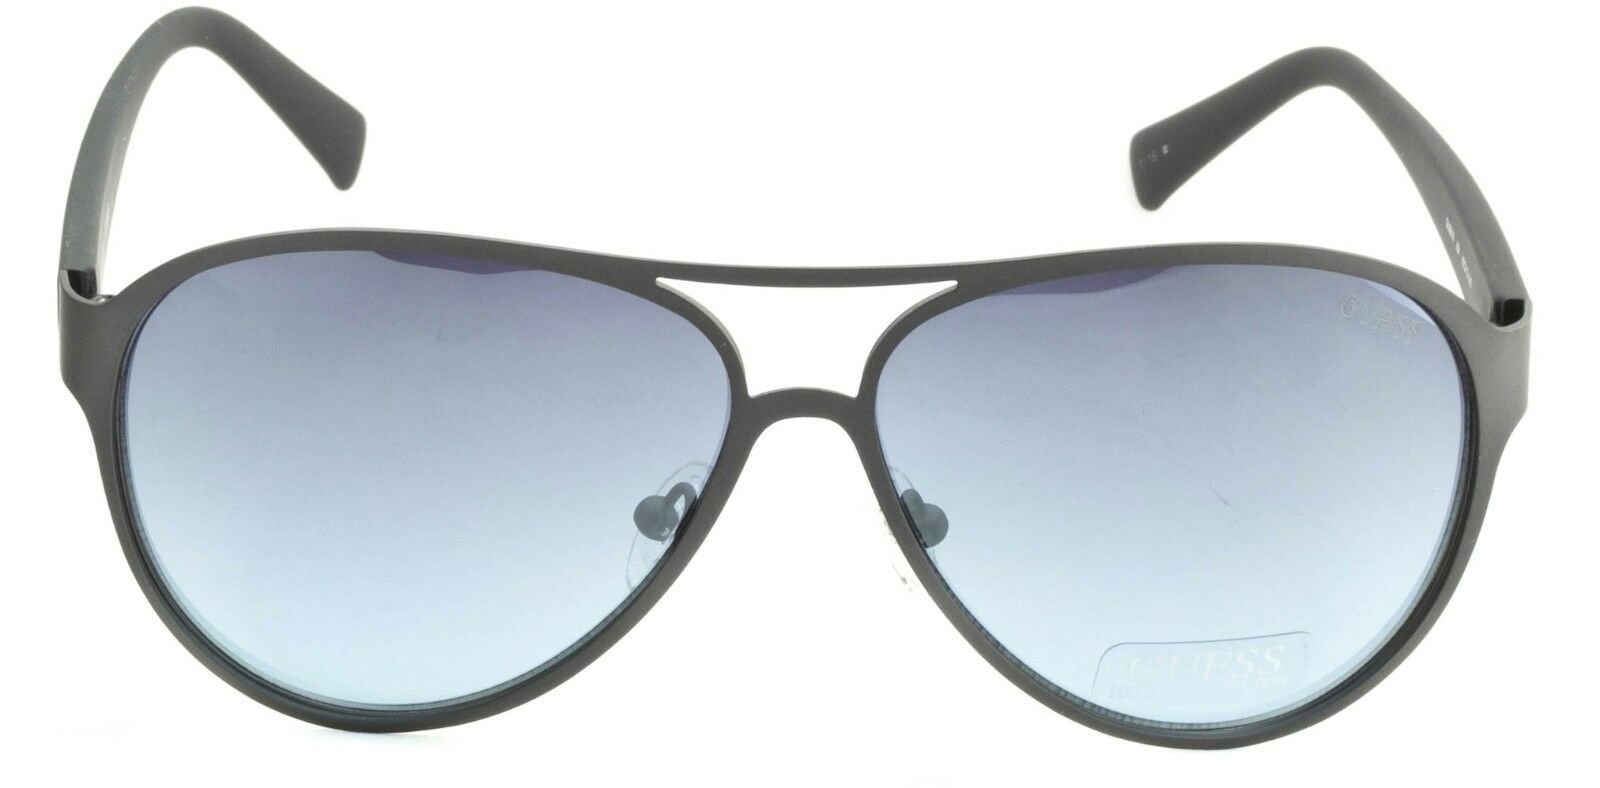 GUESS GU 6816 J54 Sunglasses Shades Fast Shipping BNIB - Brand New in Case